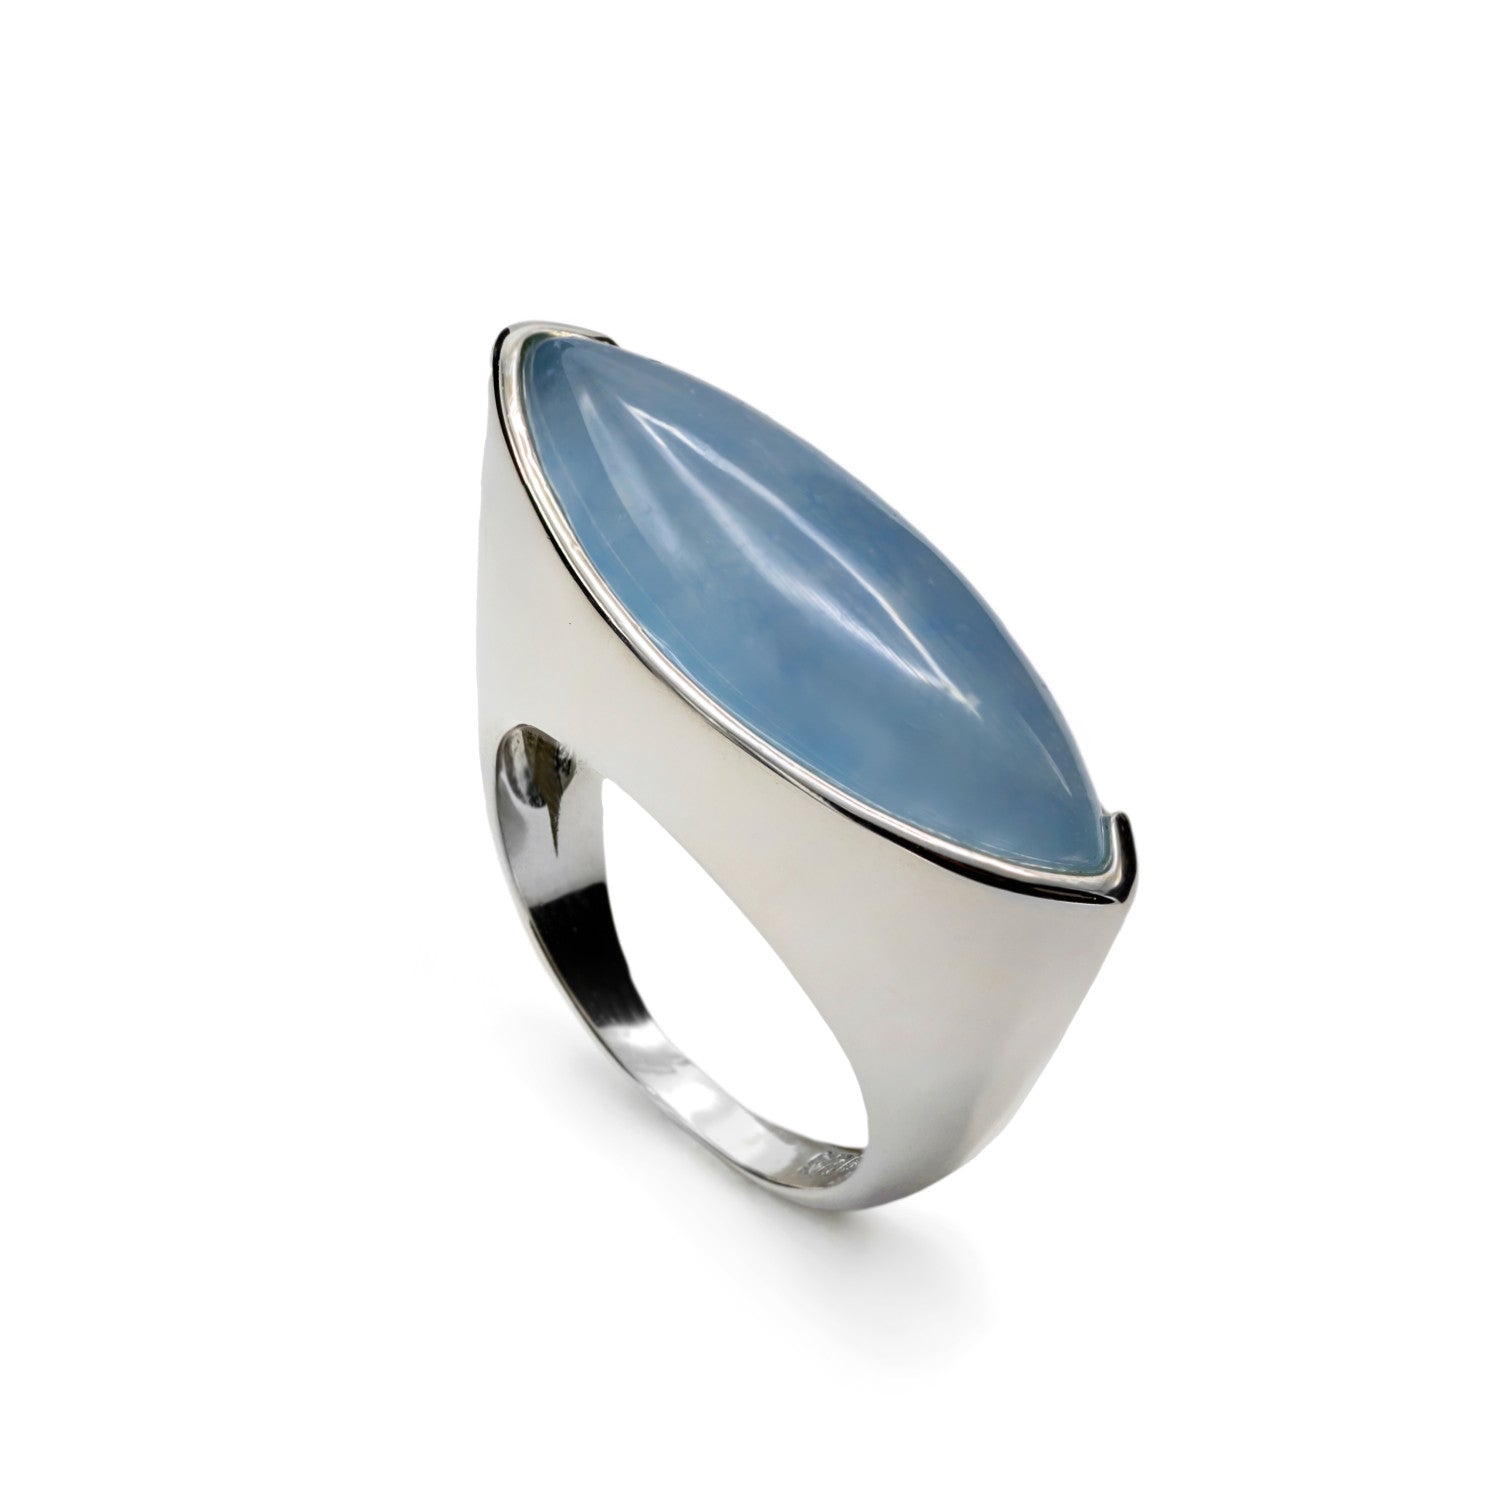 Silver aventurine rings with blue aventurine stones